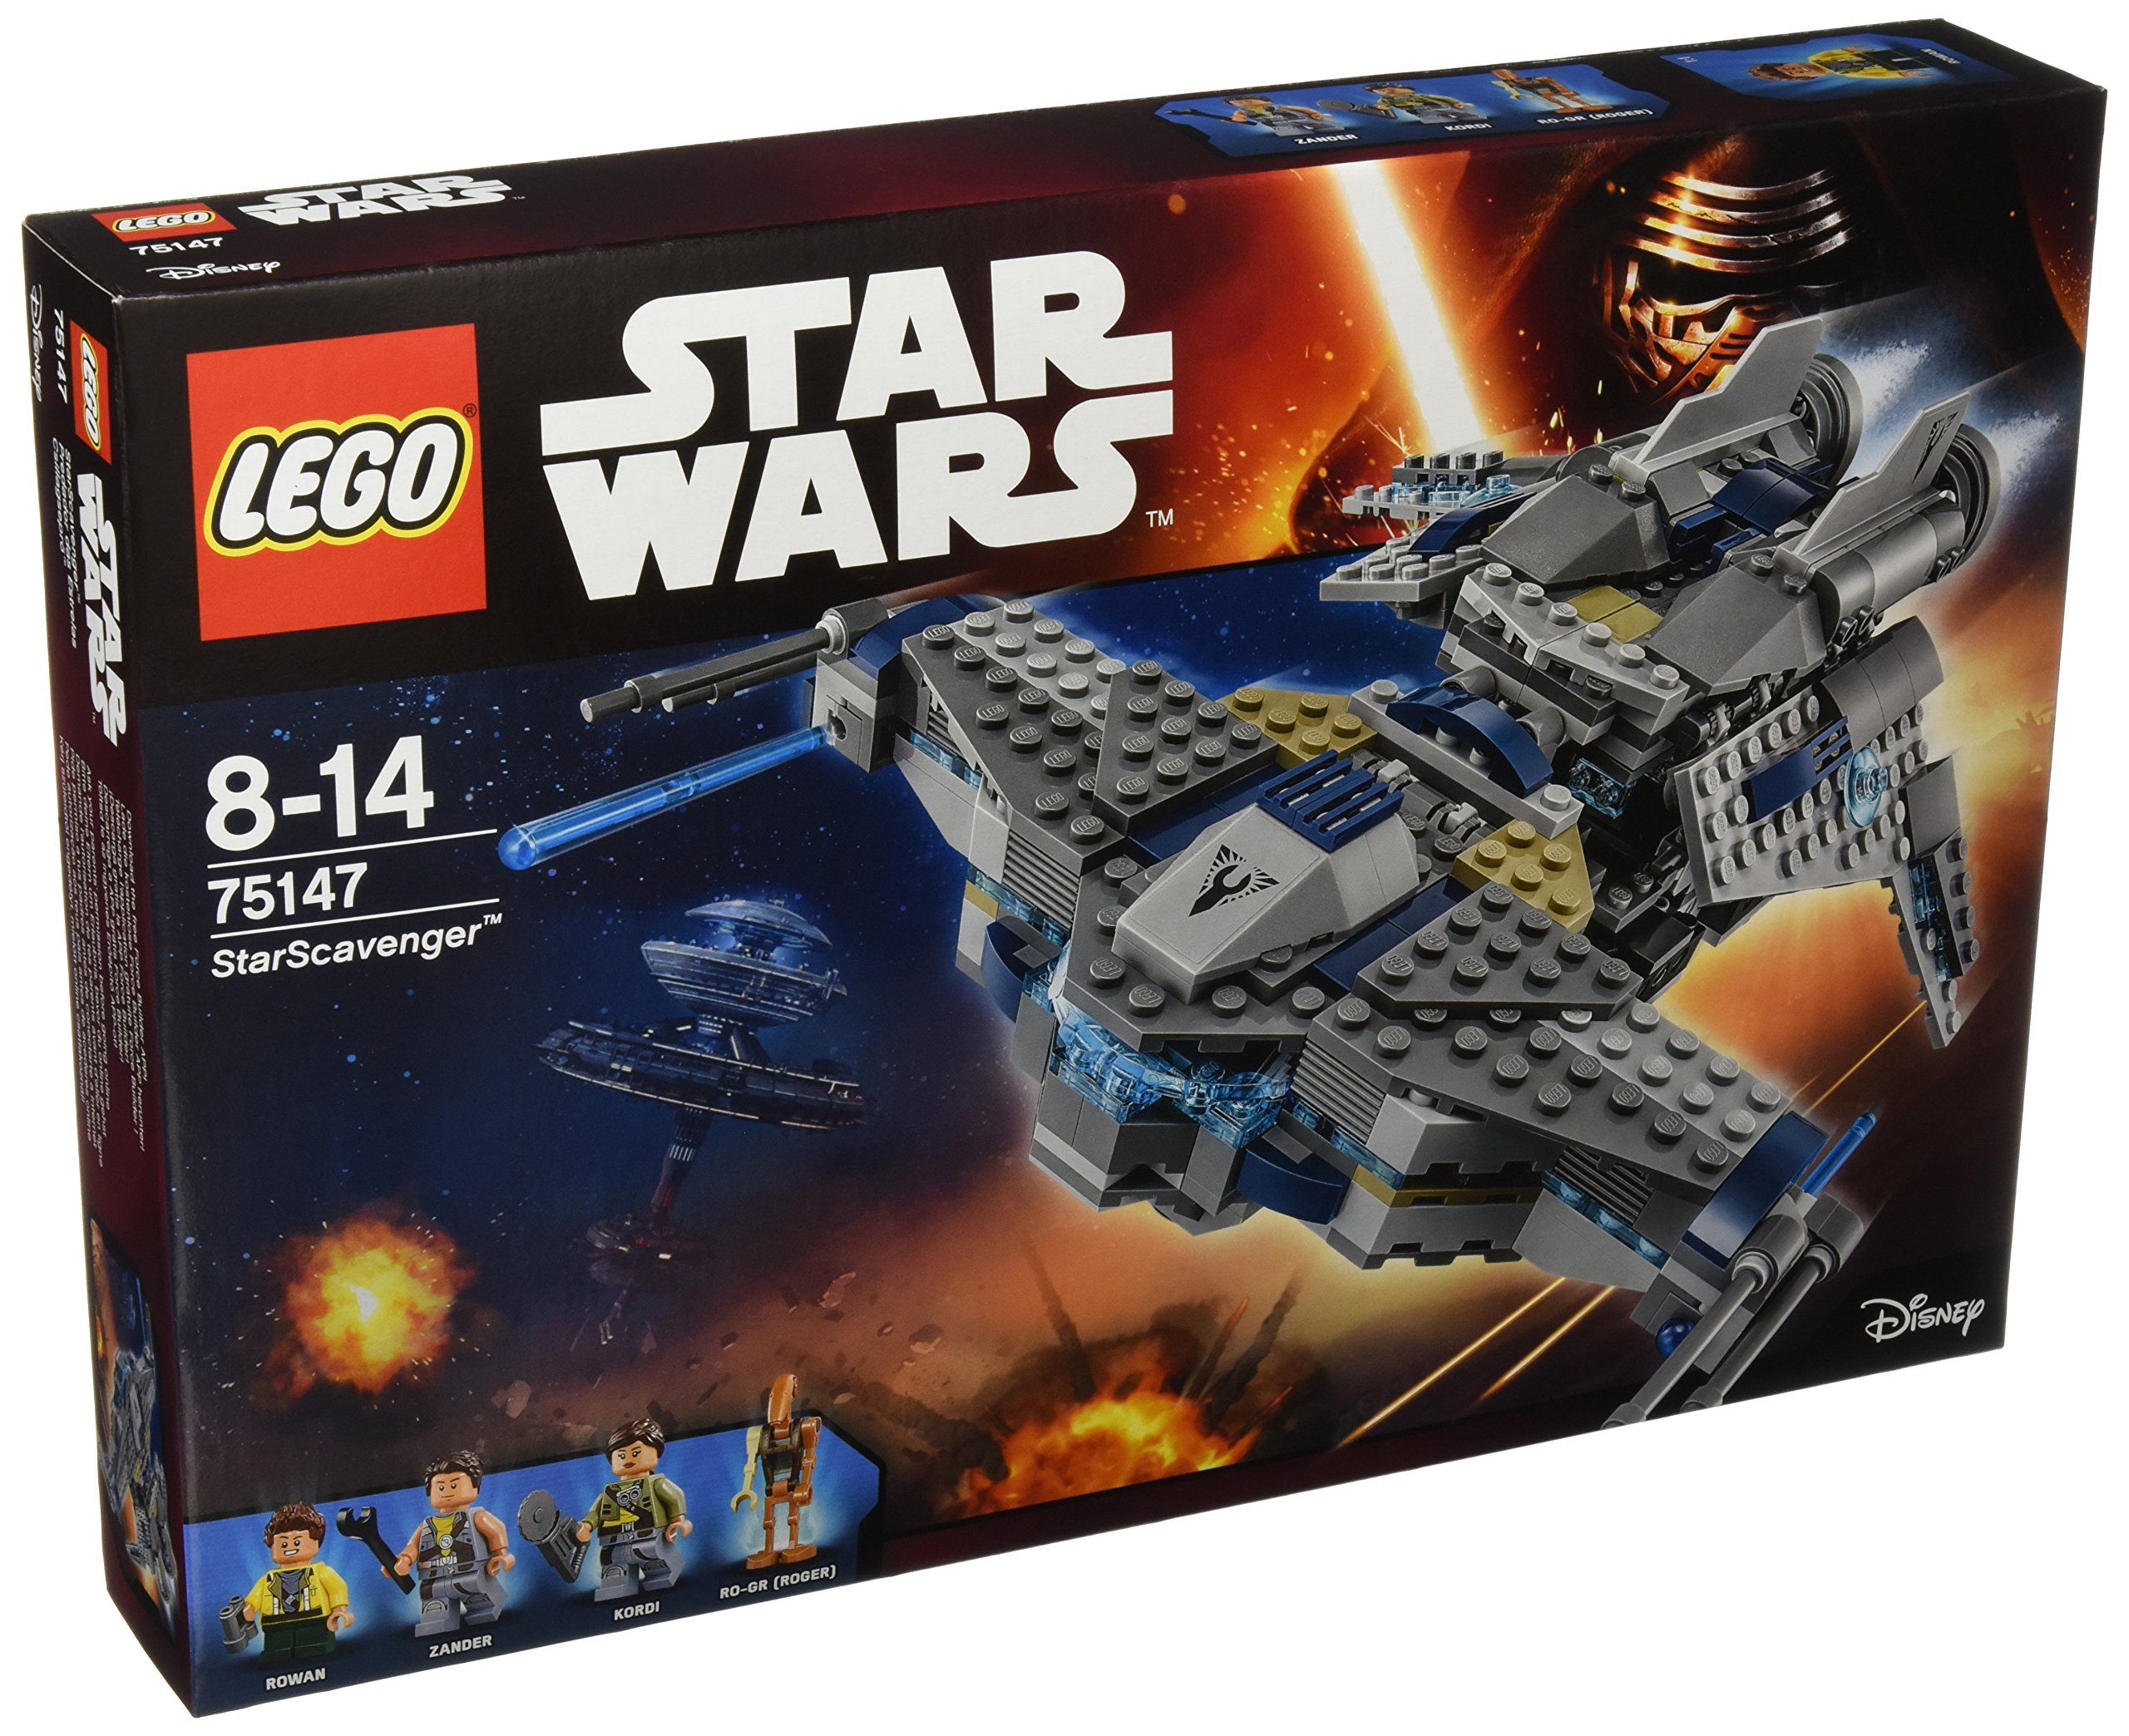 Lego Star Wars Star Scavenger Star Wars Toy